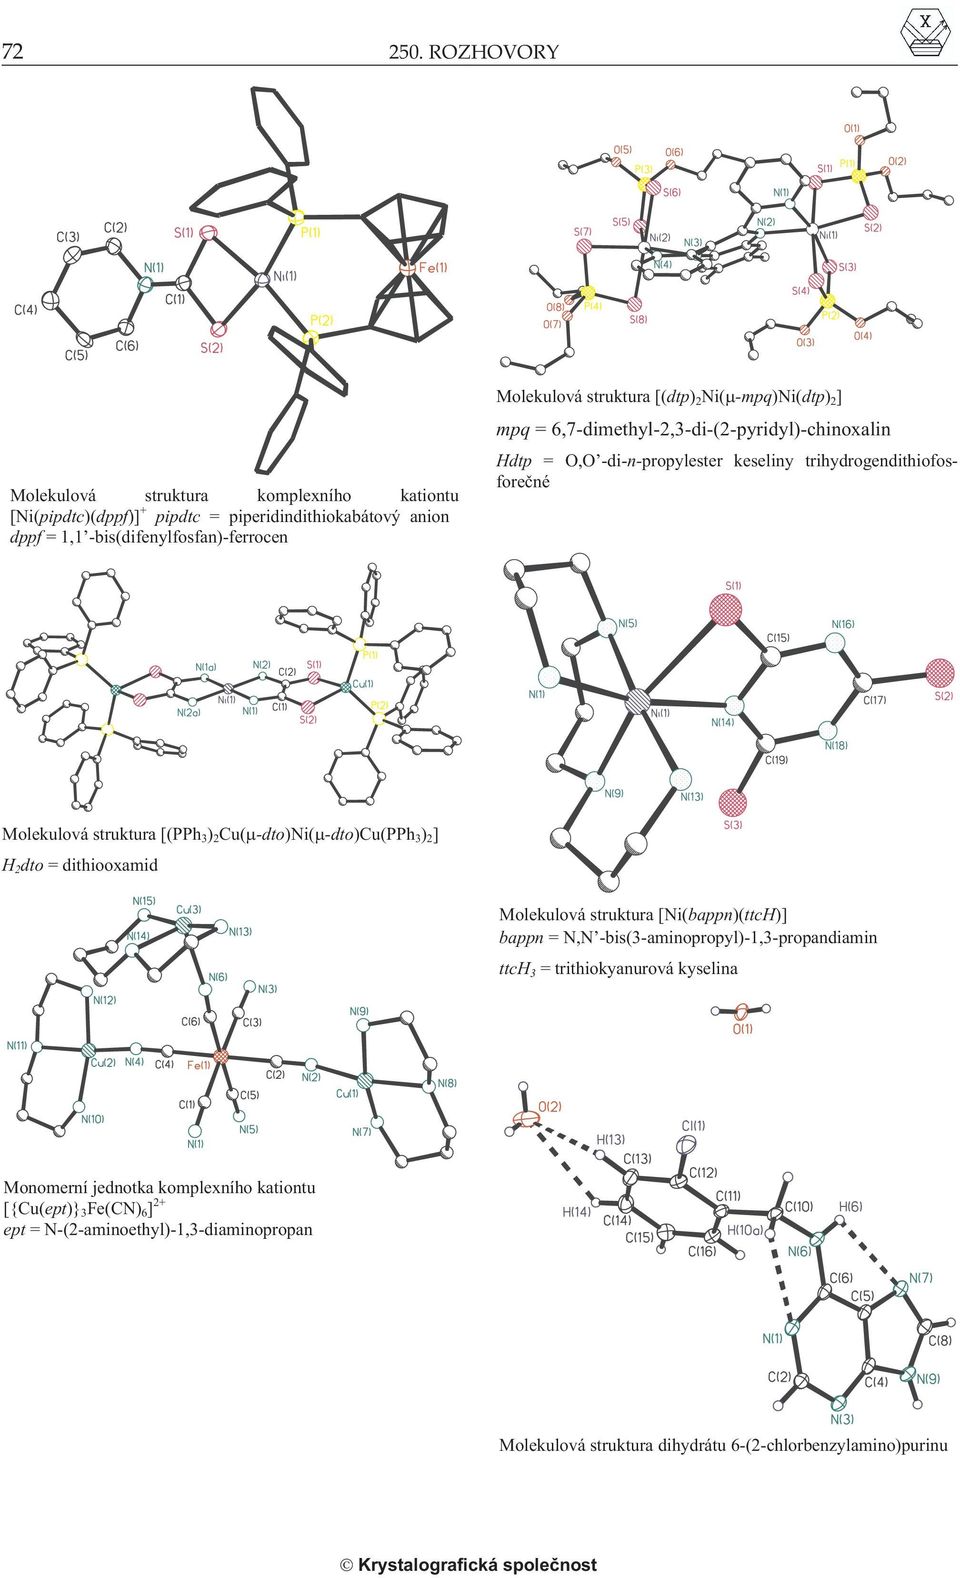 [(dtp) 2 i( -mpq)i(dtp) 2 ] mpq = 6,7-dimethyl-2,3-di-(2-pyridyl)-chinoxalin Hdtp = O,O -di-n-propylester keseliny trihydrogendithiofosforeèné Molekulová struktura [(PPh 3 )